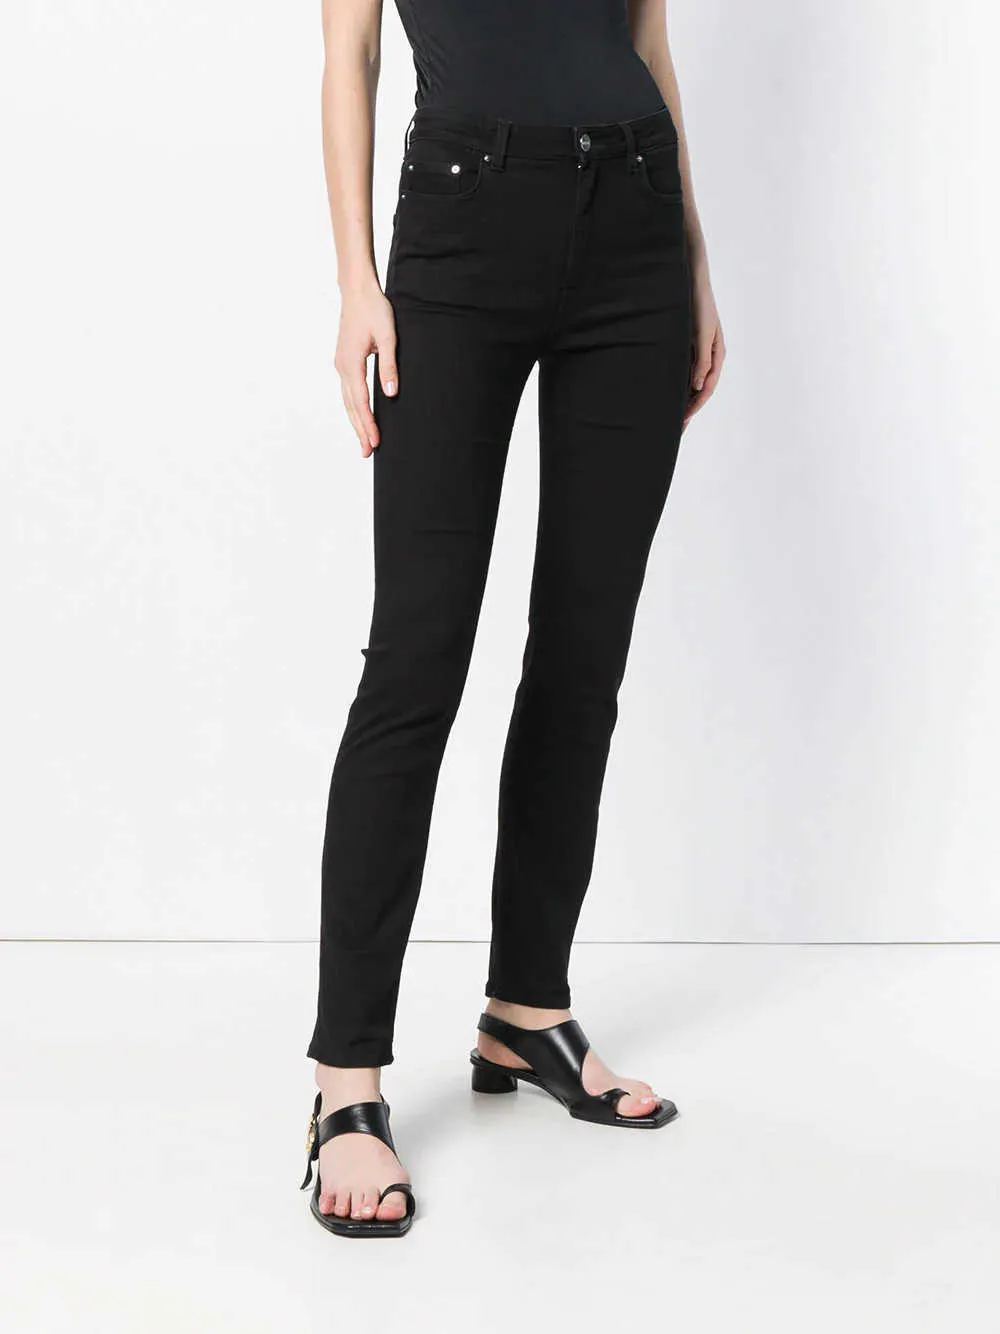 Women's Jeans Nordic toteme casual jeans high waist elastic Slim small narrow feet slim pencil women's pants